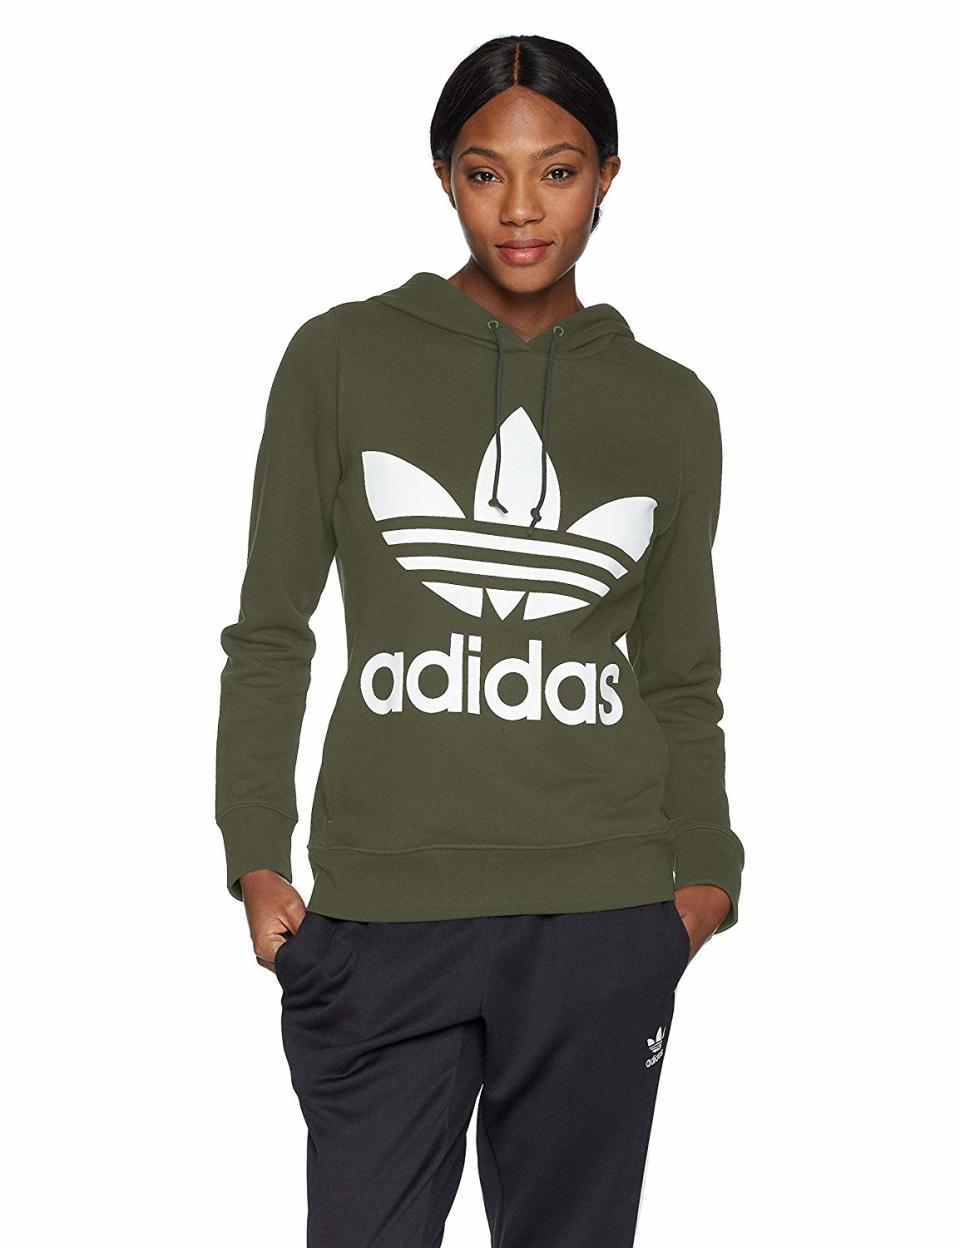 Adidas women's hoodie